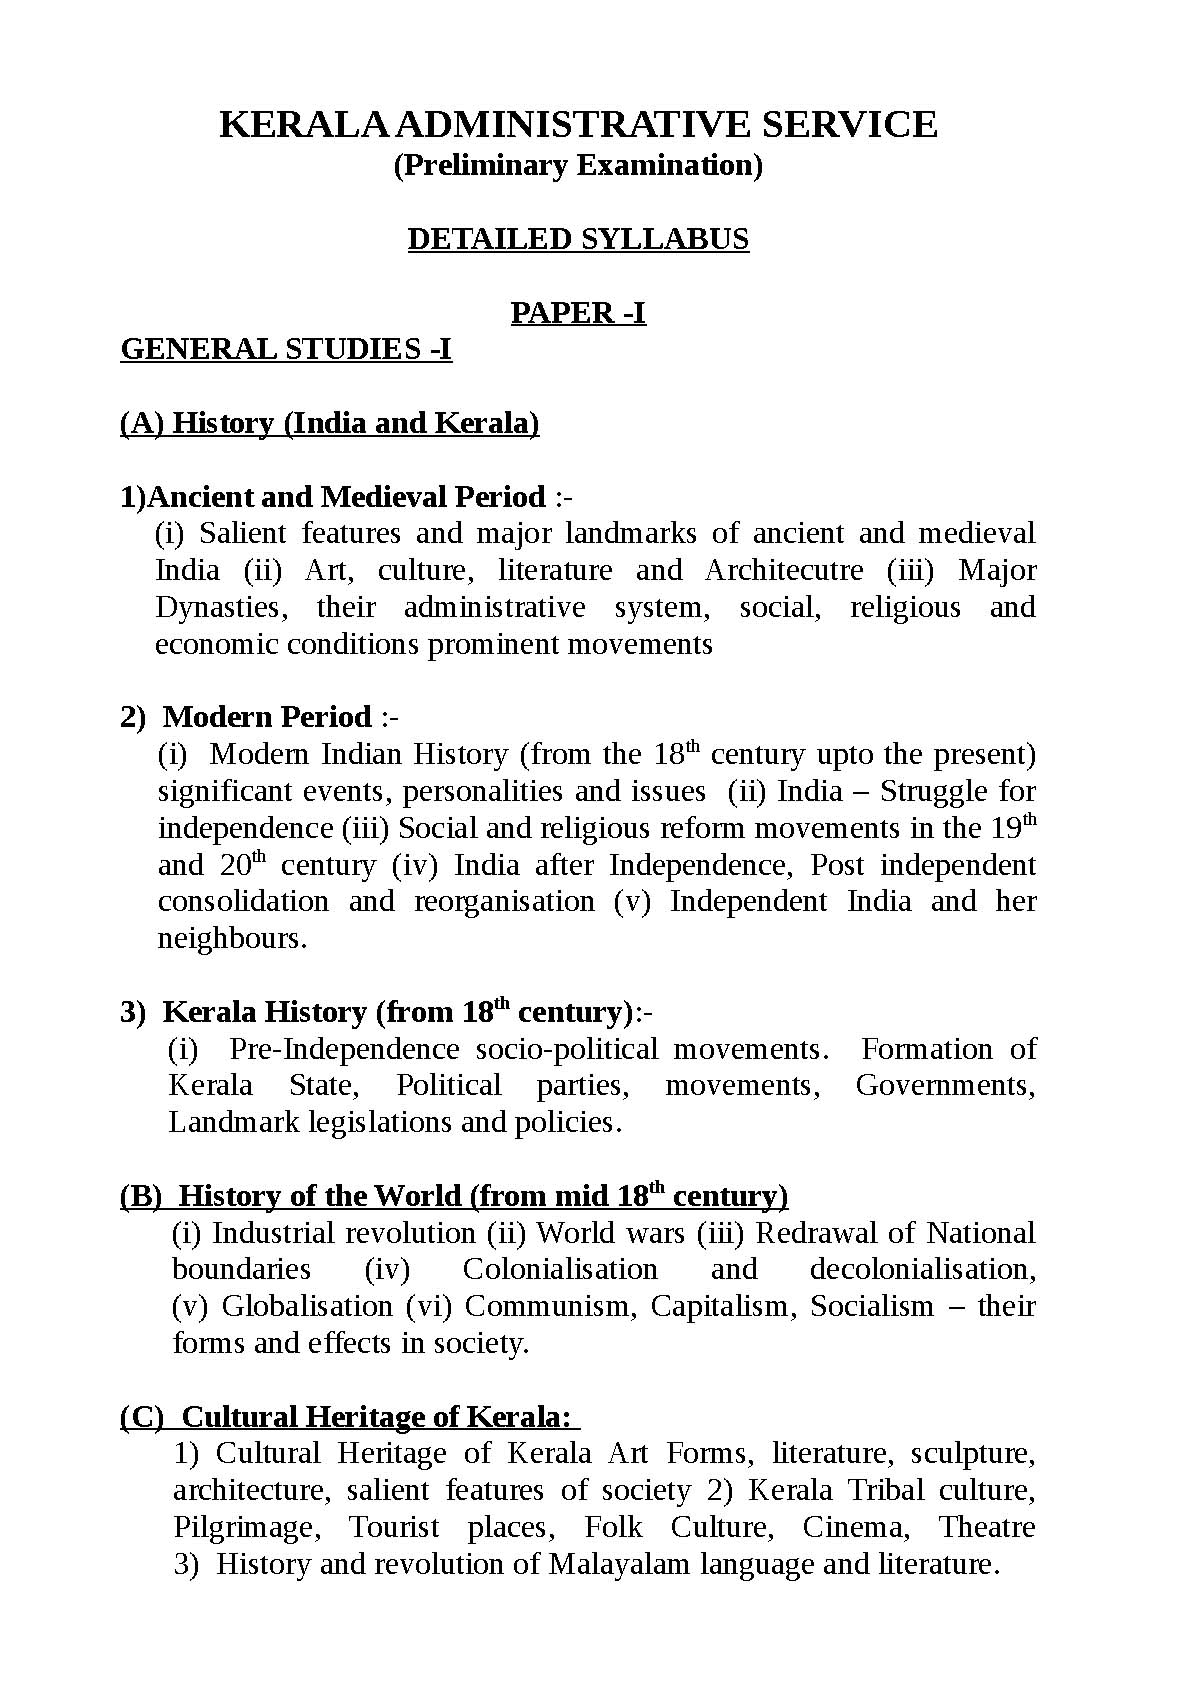 Kerala Administrative Service Preliminary Exam Syllabus - Notification Image 1